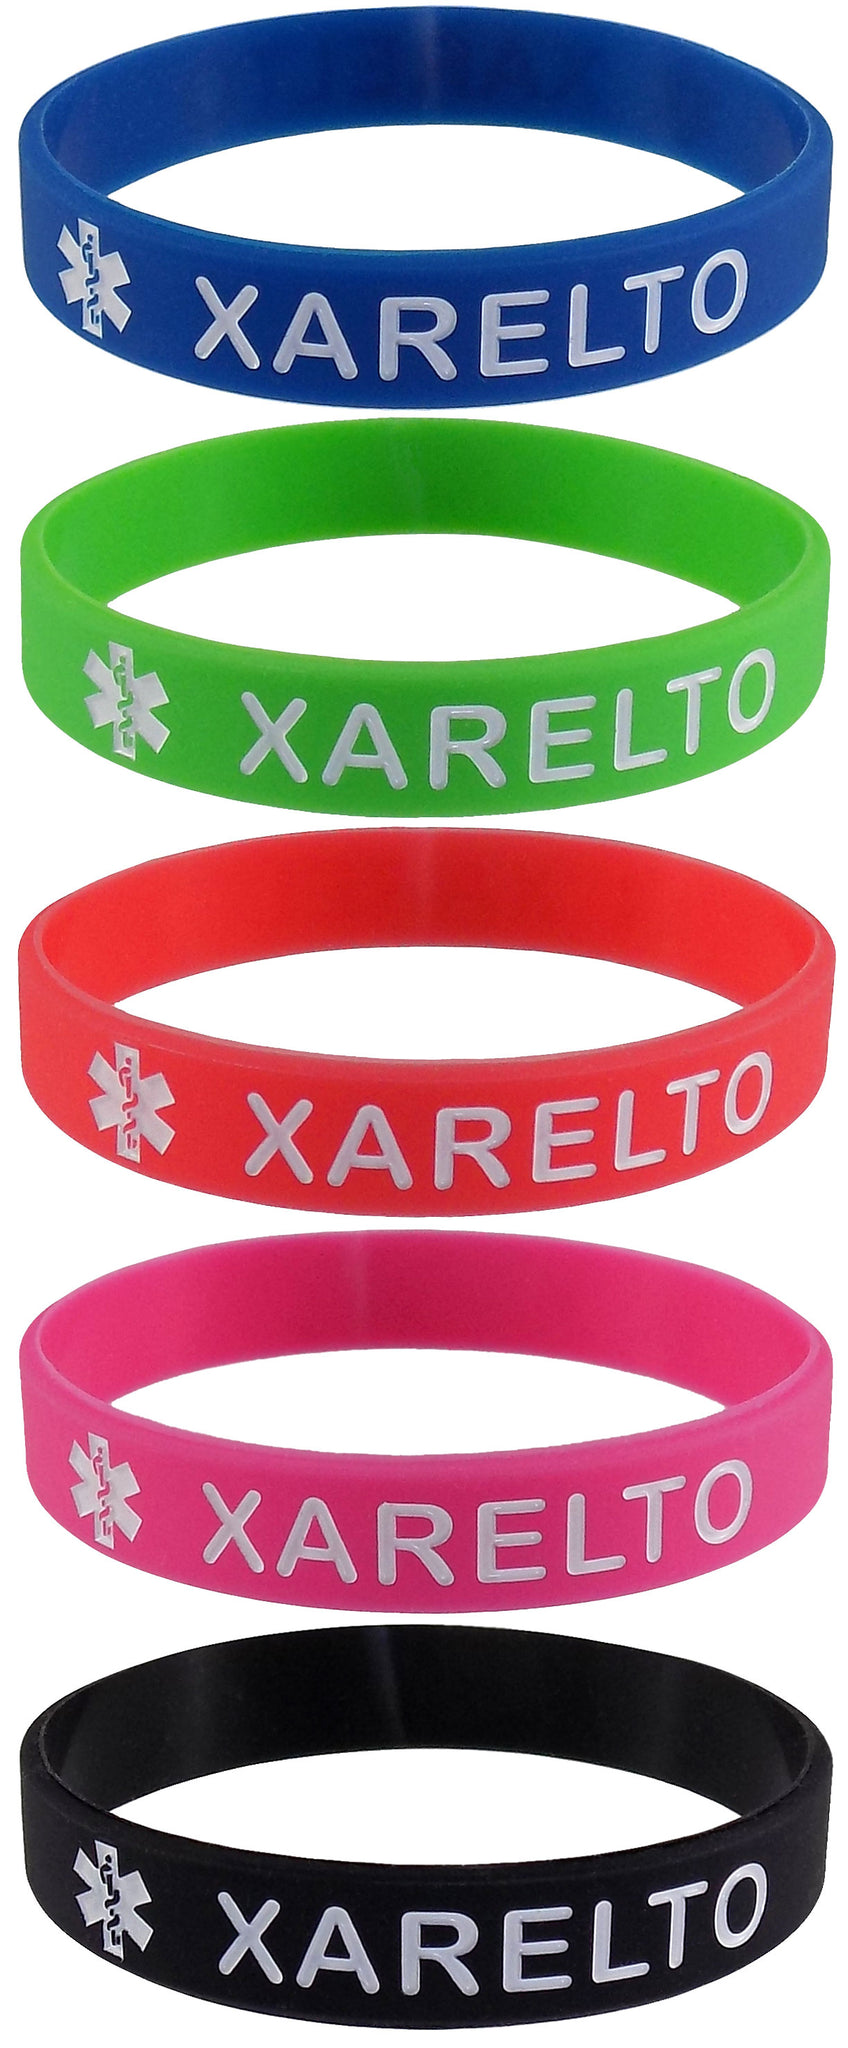 5 Pack - "XARELTO" Silicone Bracelet Wristbands